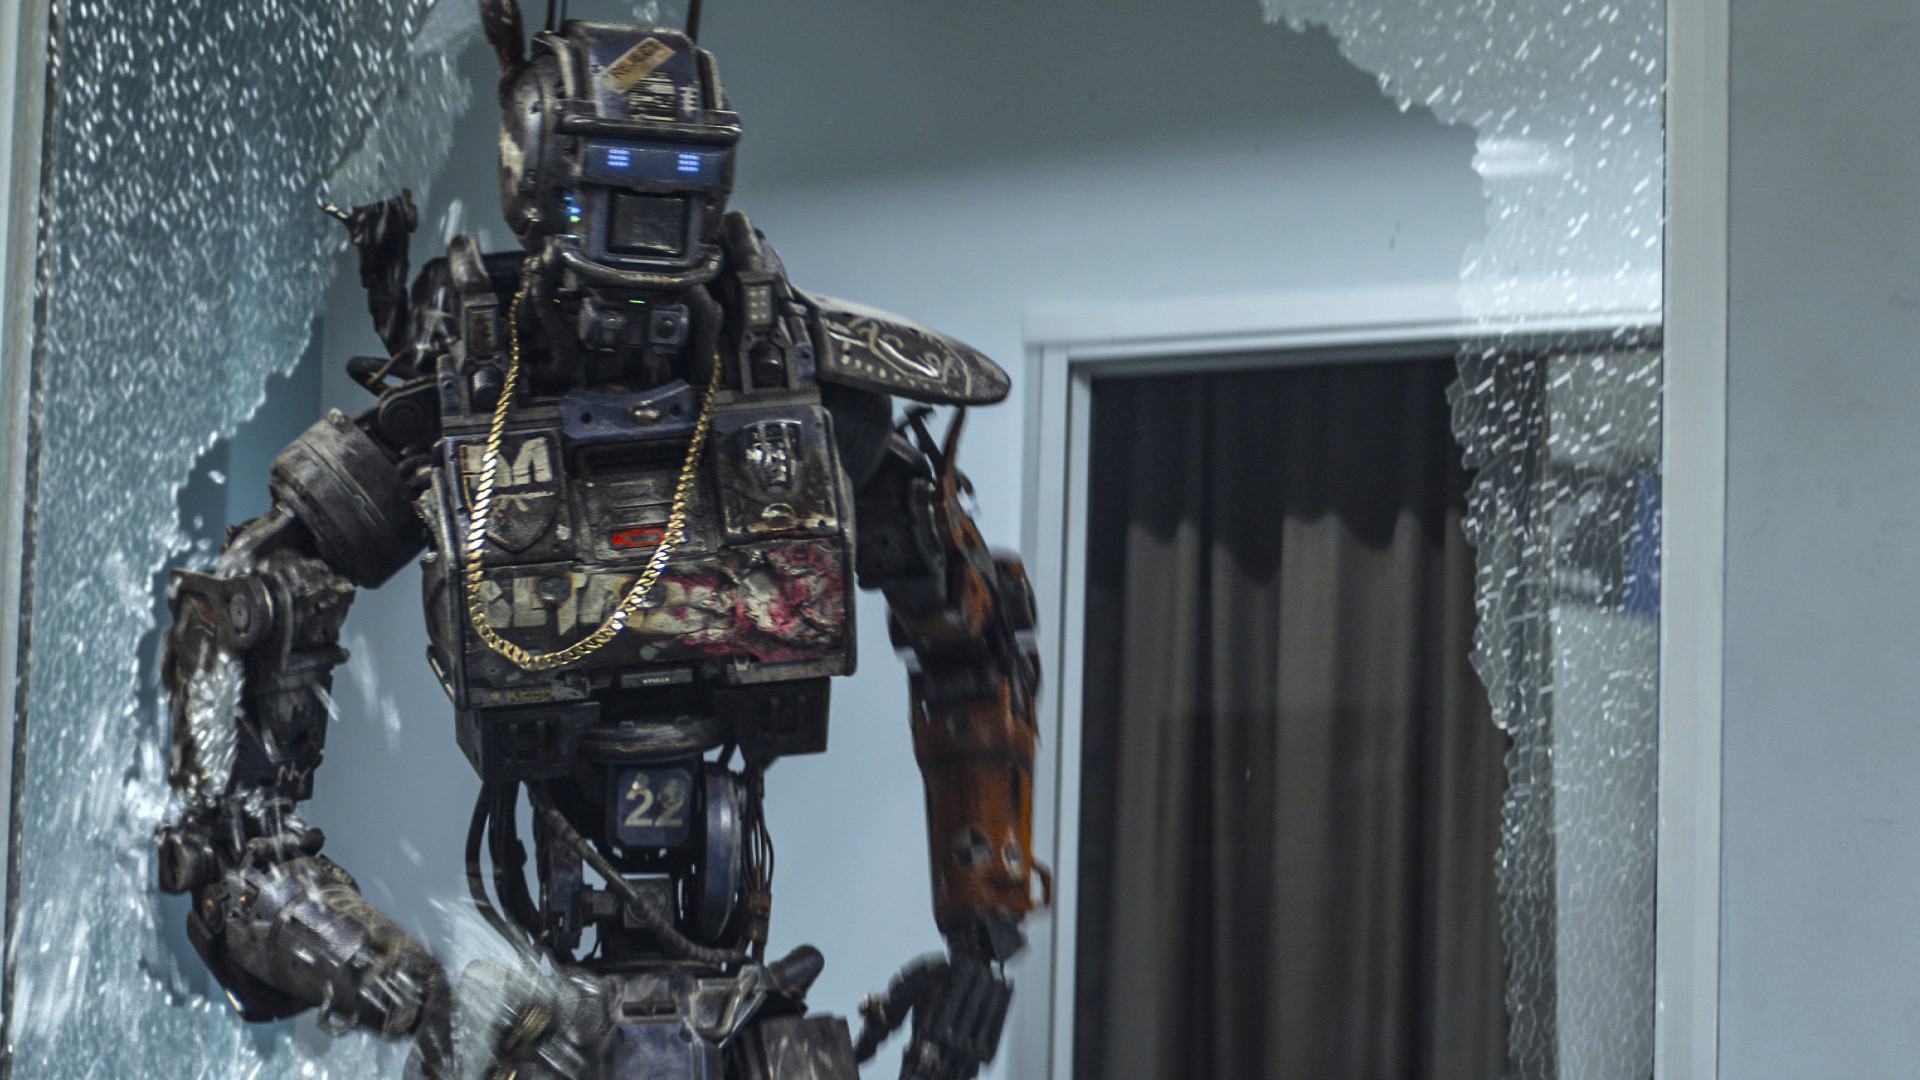 Chappie, Best Movies of 2015, wallpaper, robot, police, gun (horizontal)